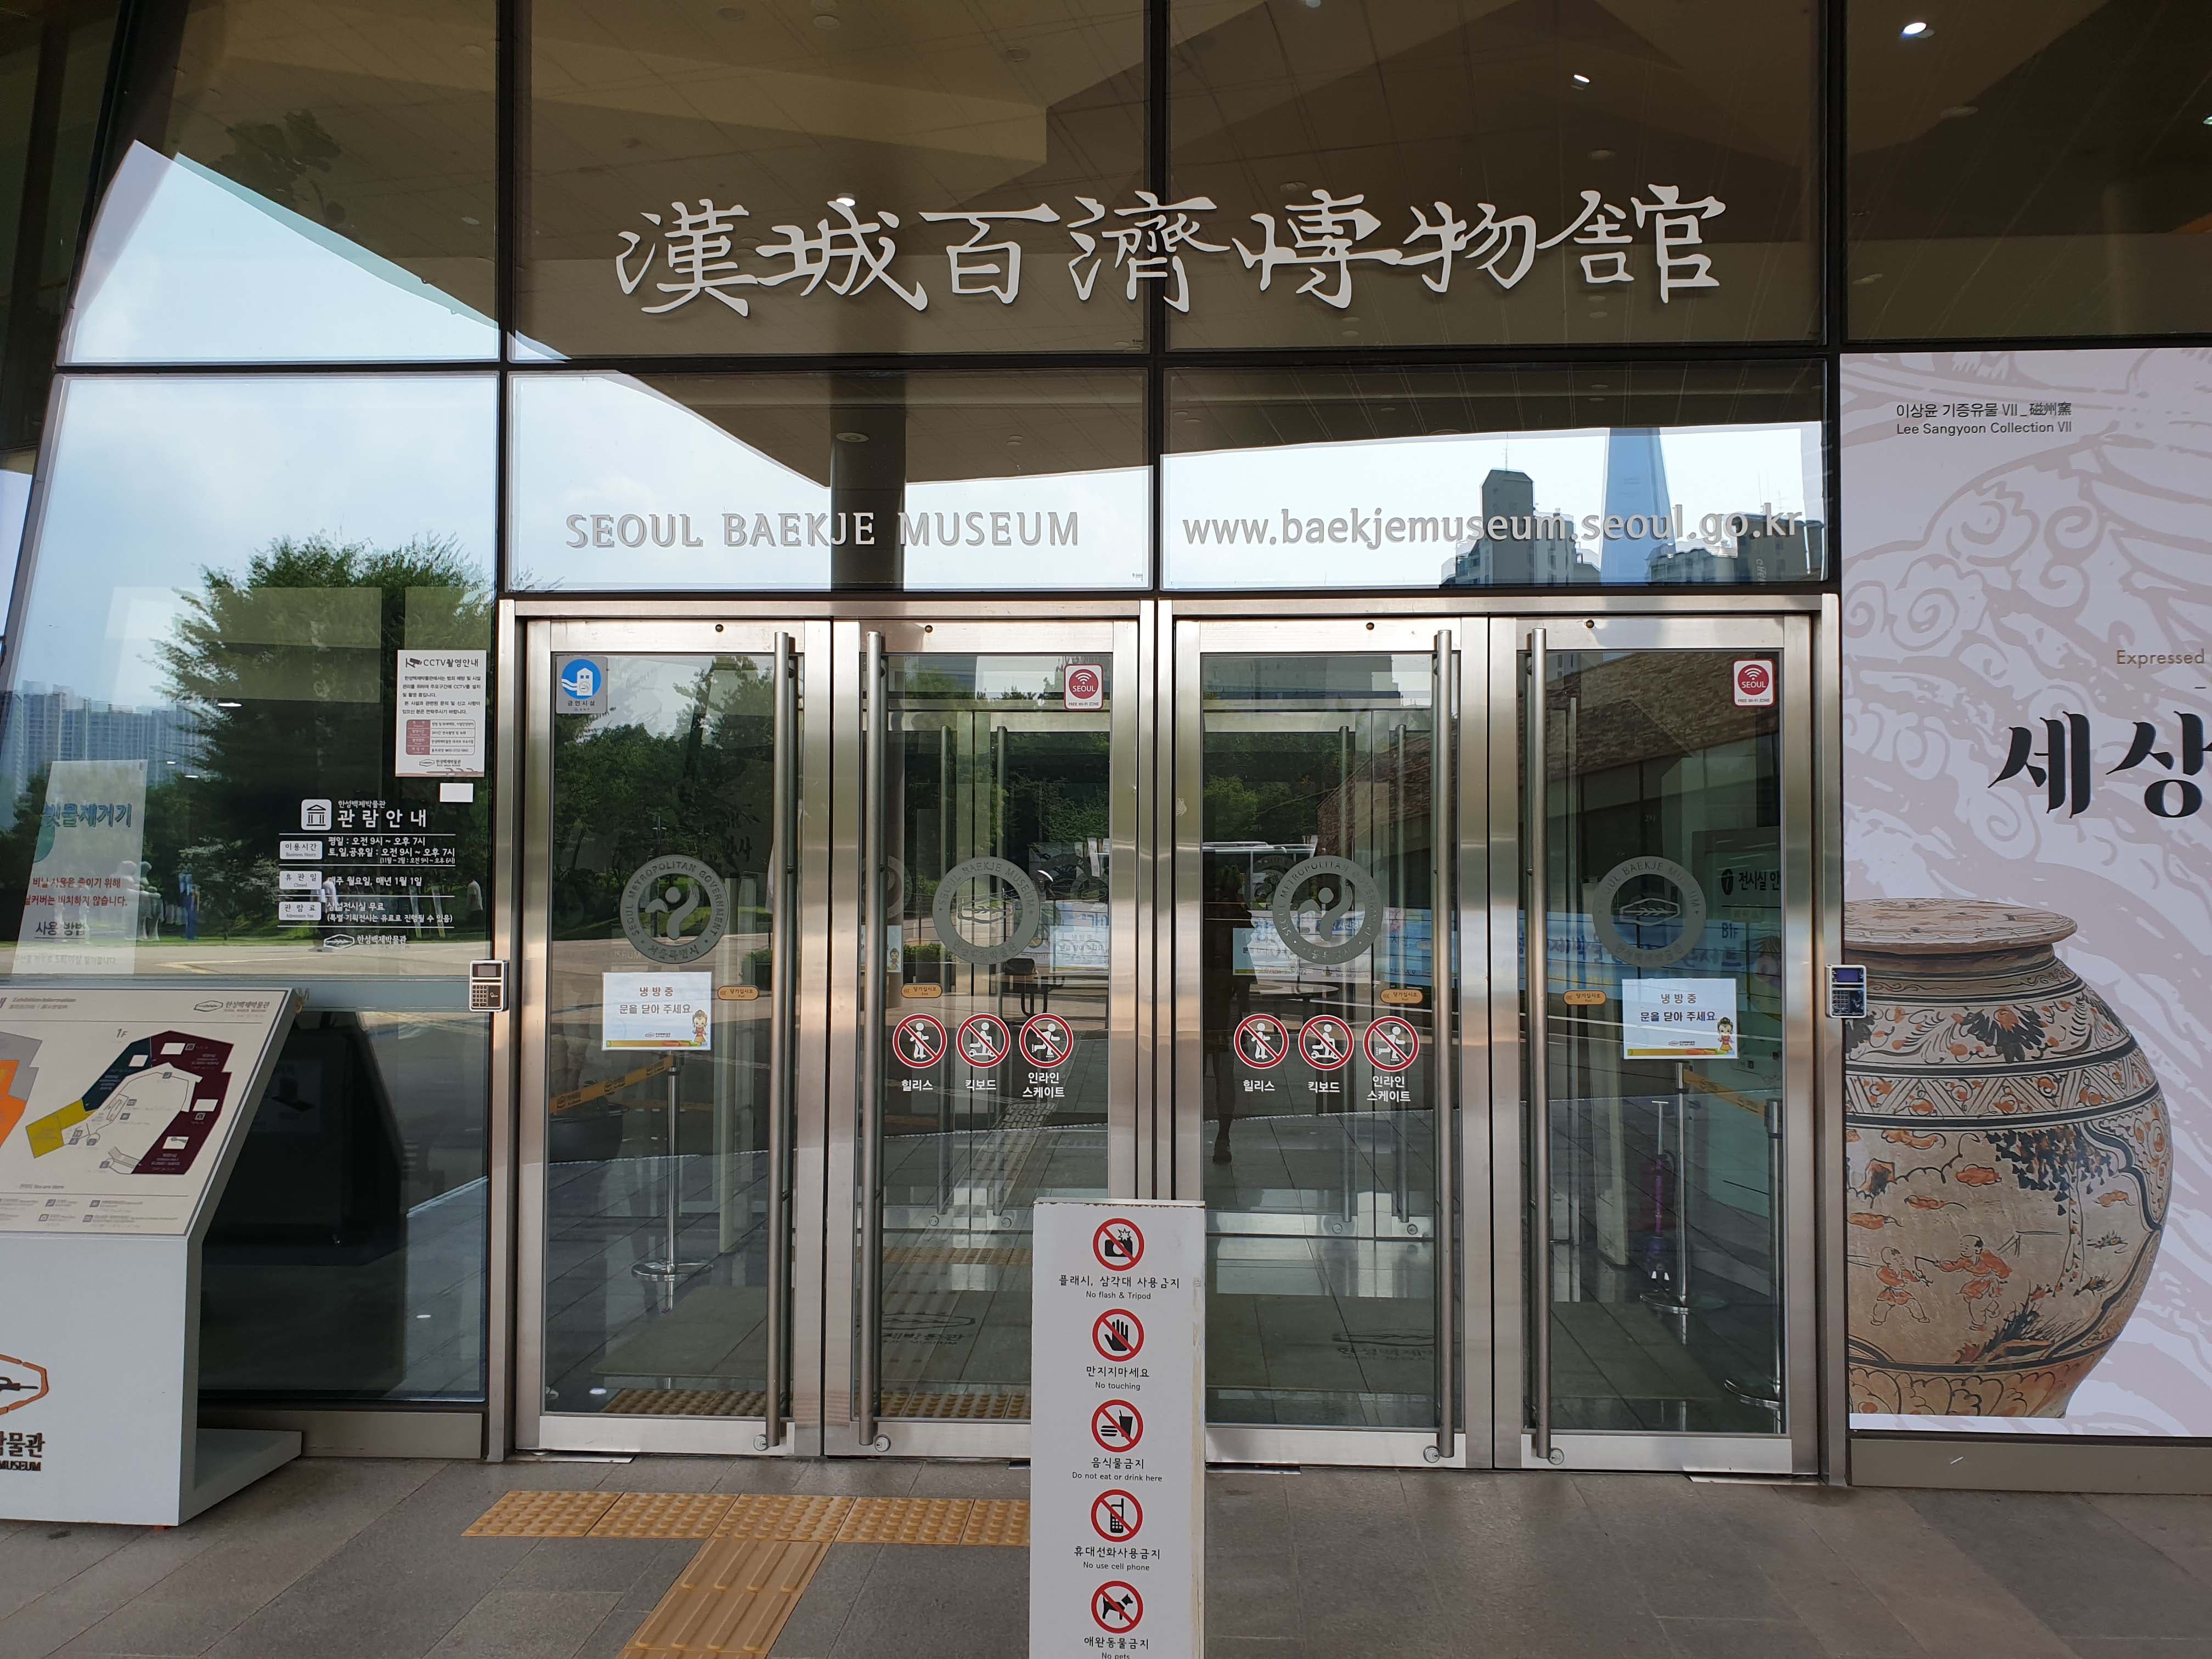 Seoul Baekje Museum3 : A view of the main entrance of the Hanseong Baekje Museum